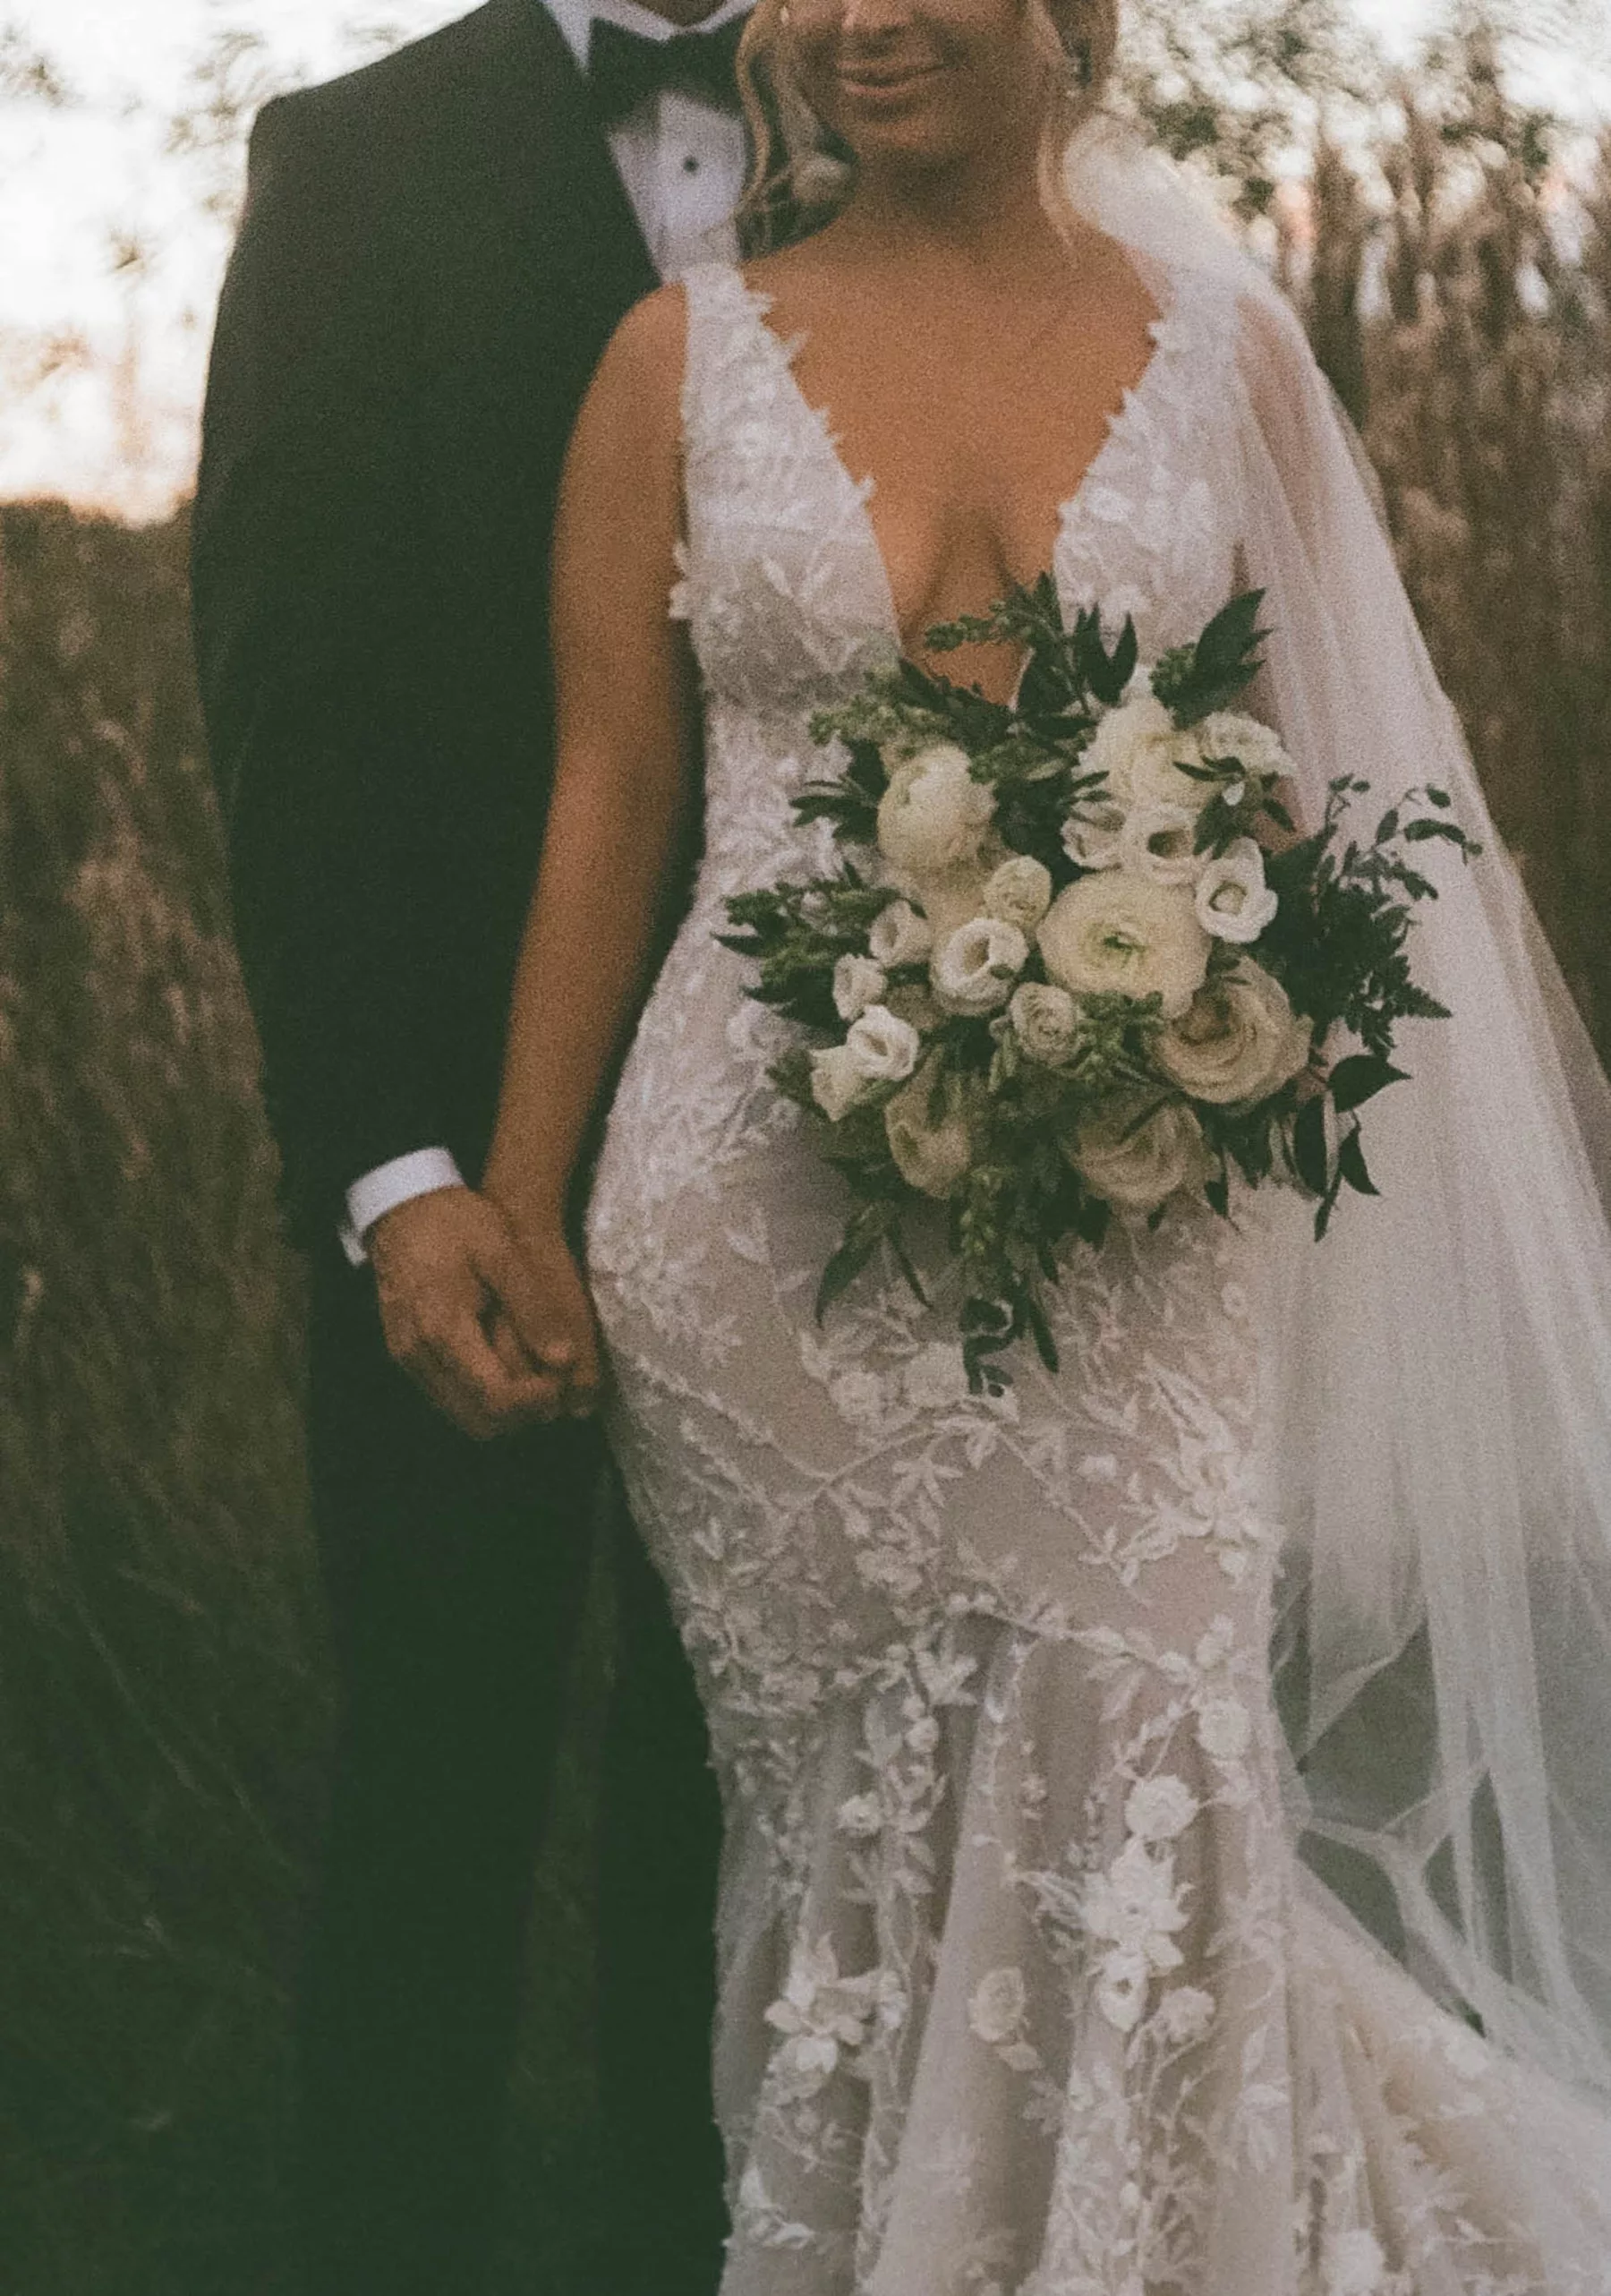 Bride and Groom Golden Hour Film Wedding Portrait | Tampa Bay Photographer Evoke Photo and Film